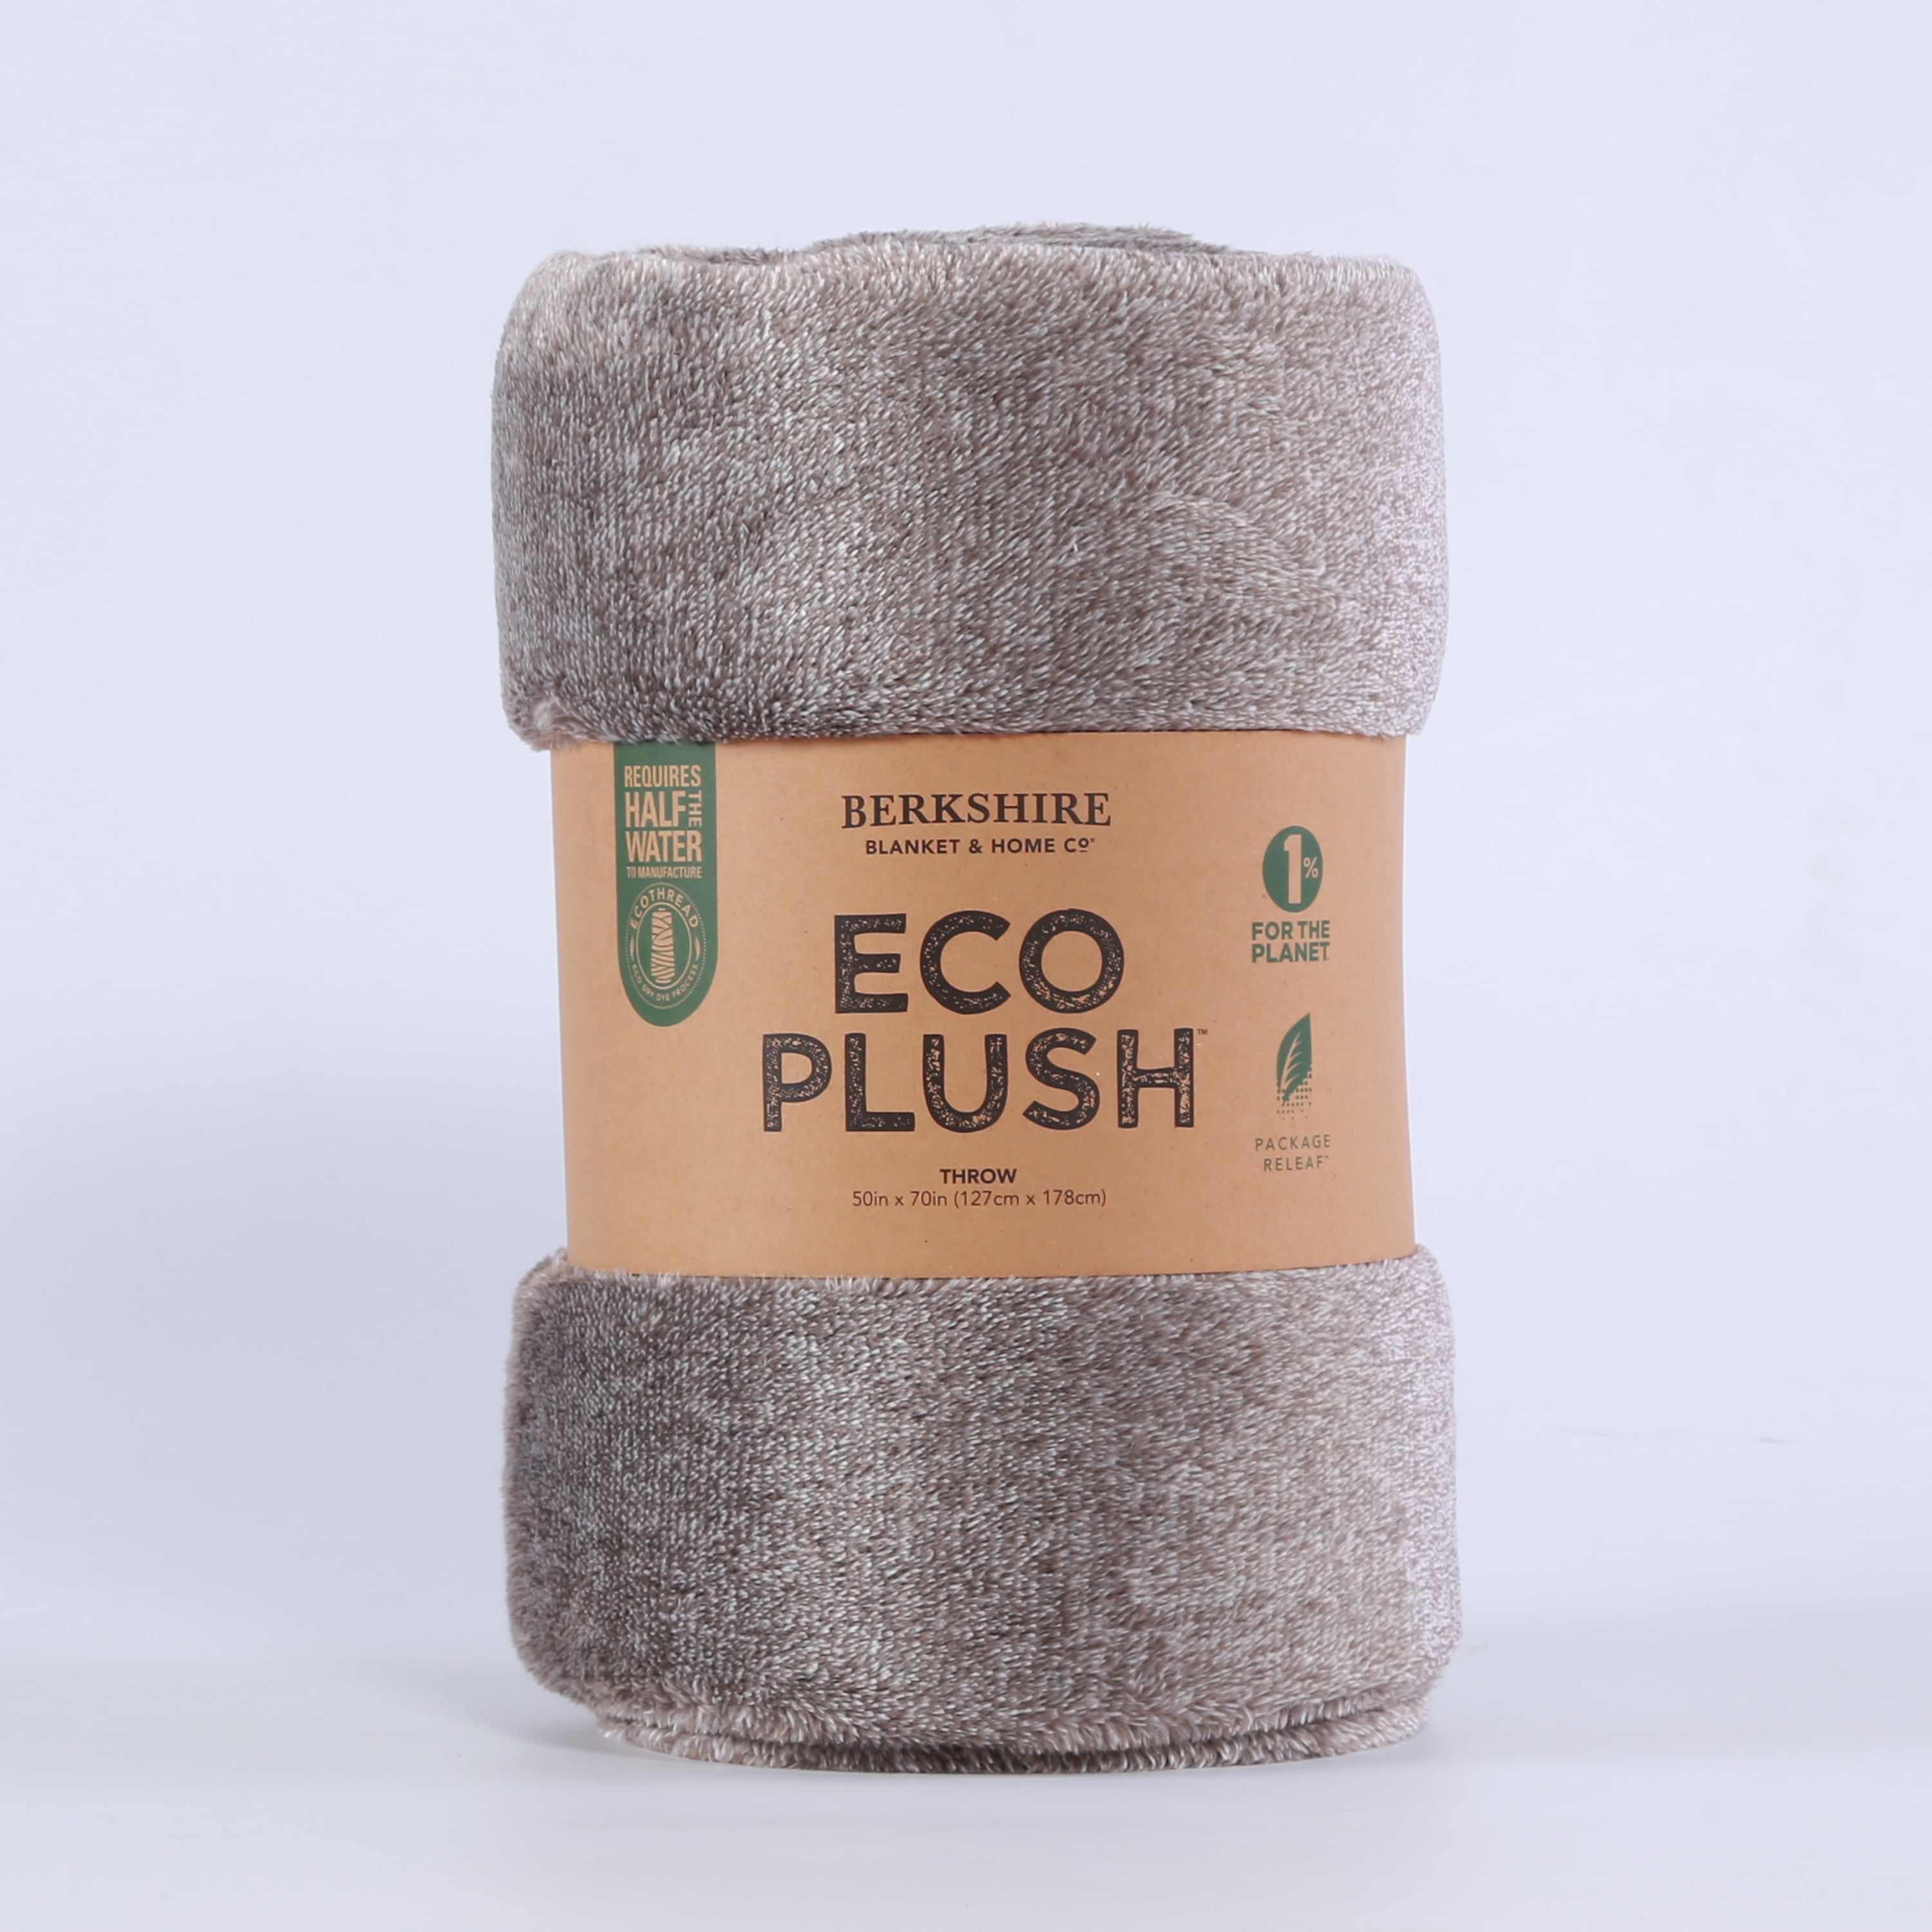 Berkshire Blanket & Home Co Eco Plush Throw 50” x 70” Tan